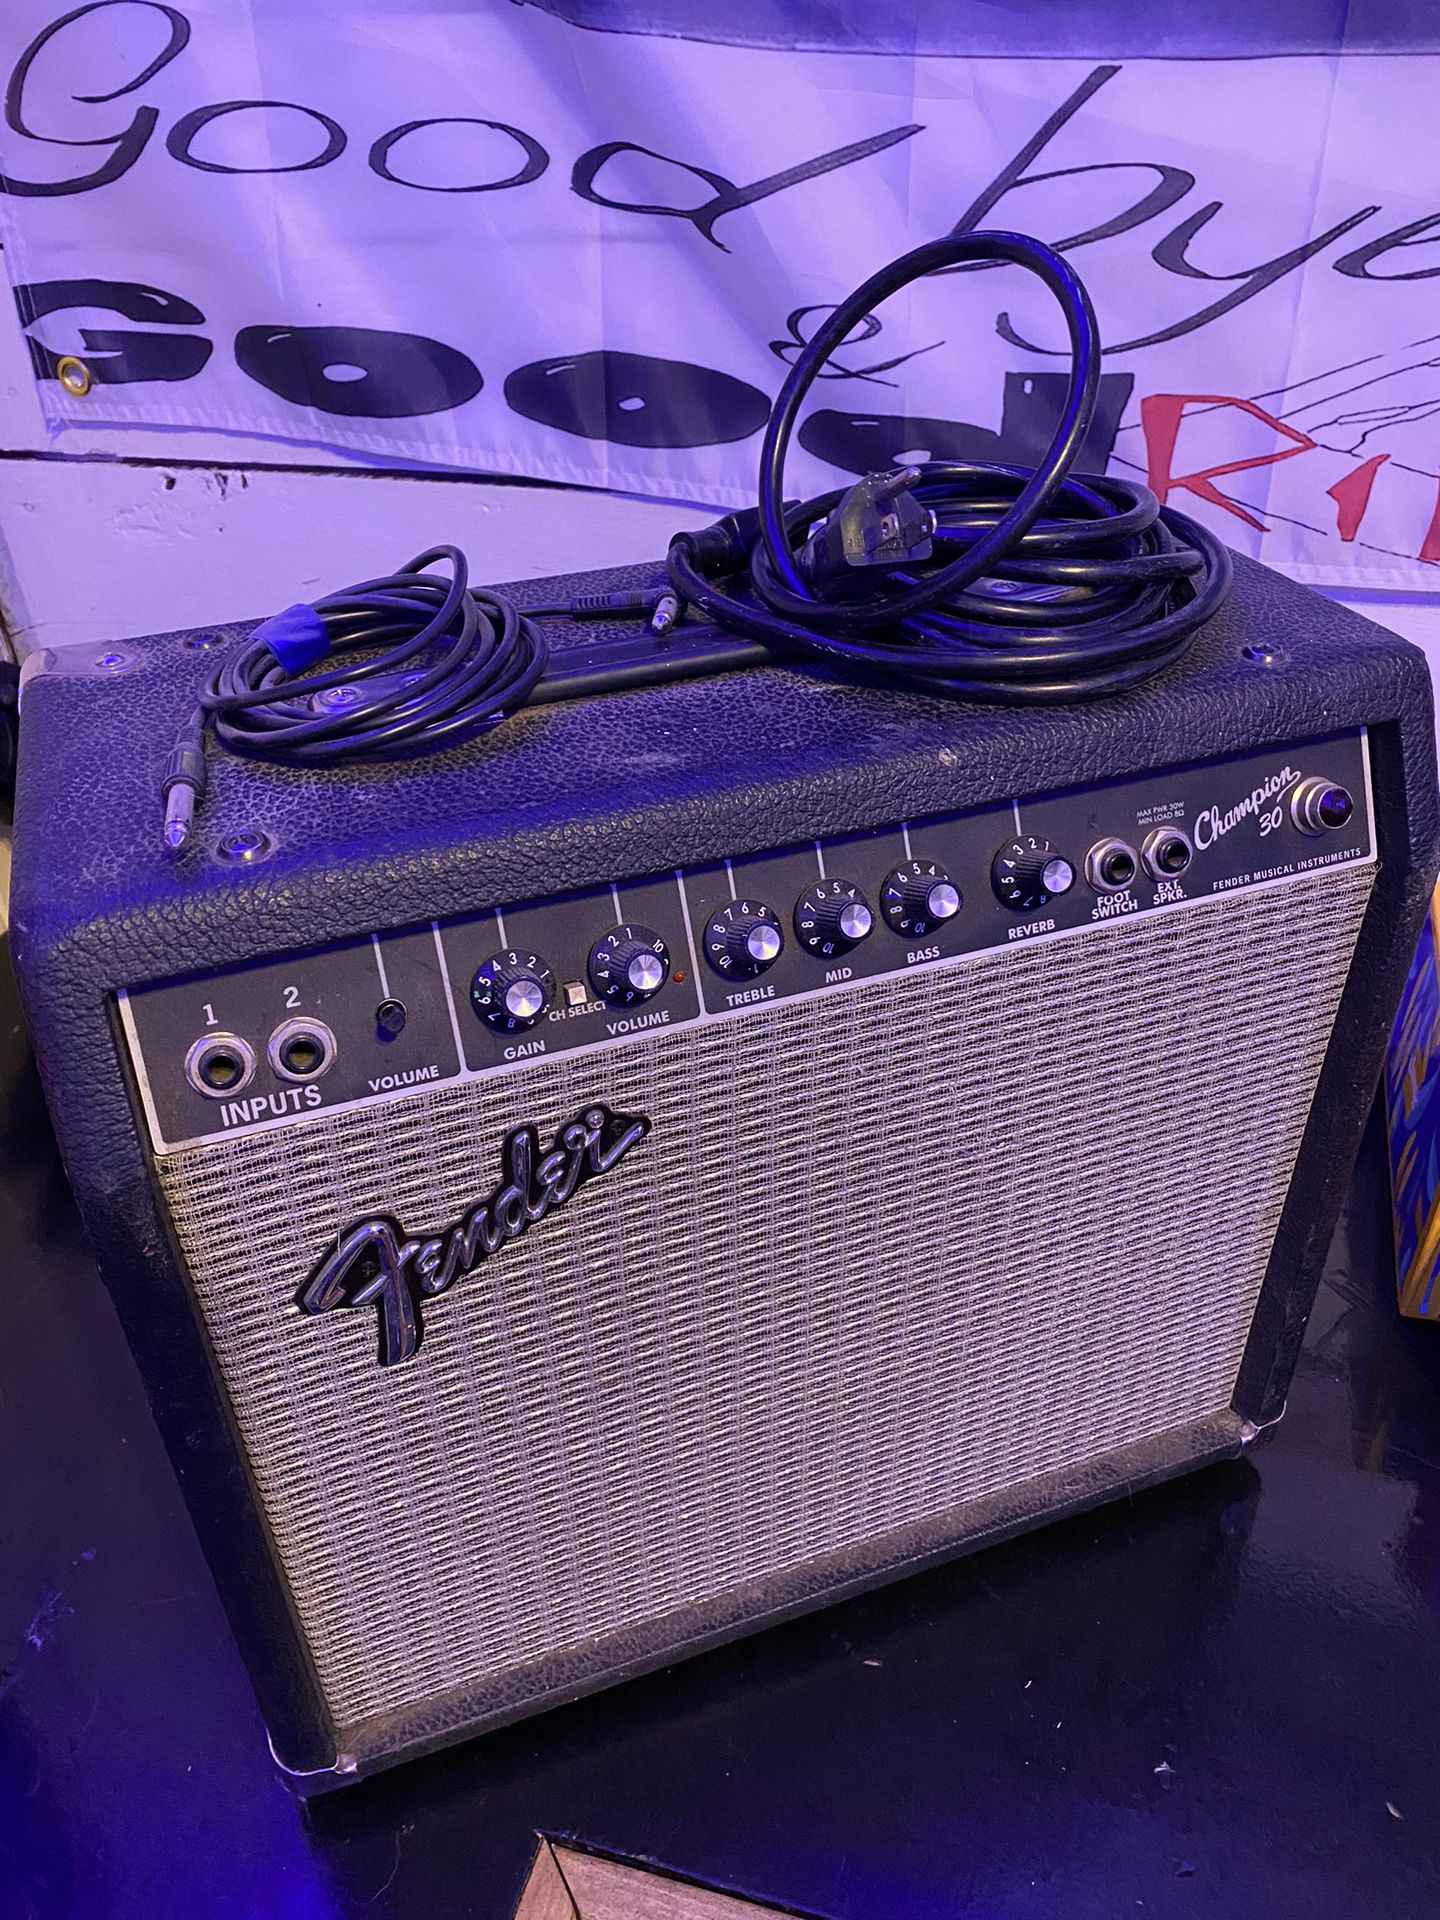 Fender Practice amp